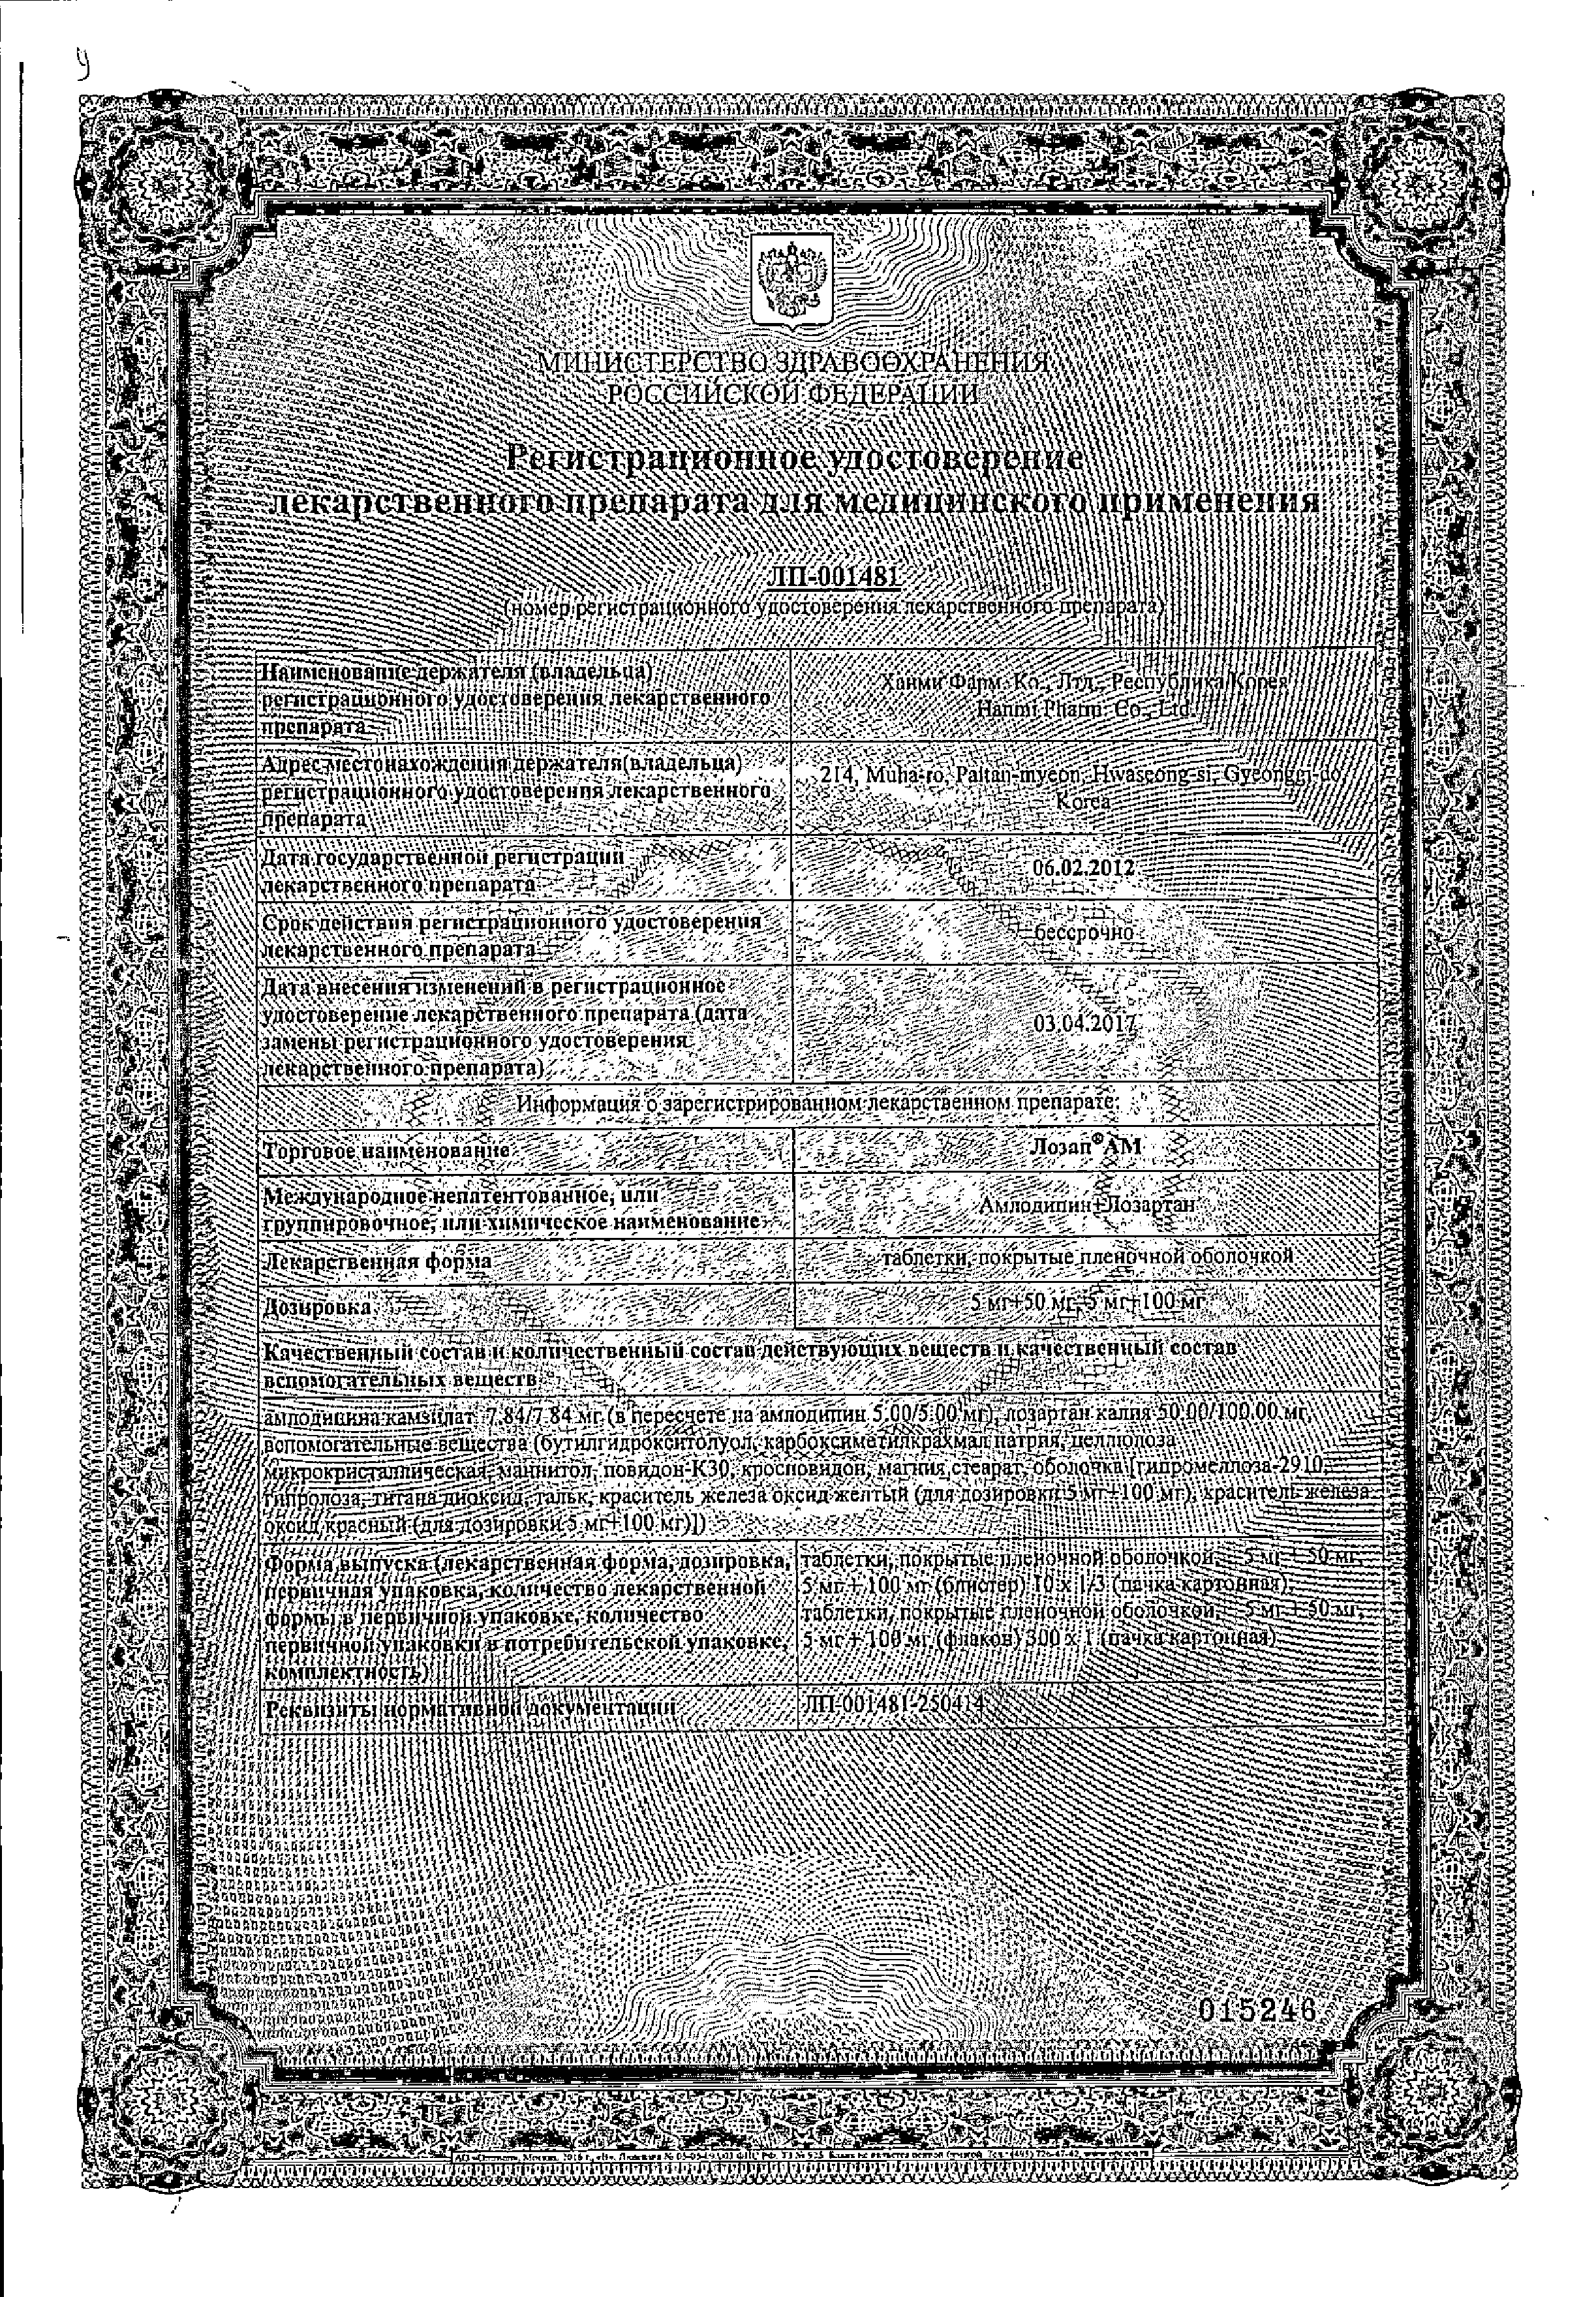 Лозап АМ сертификат